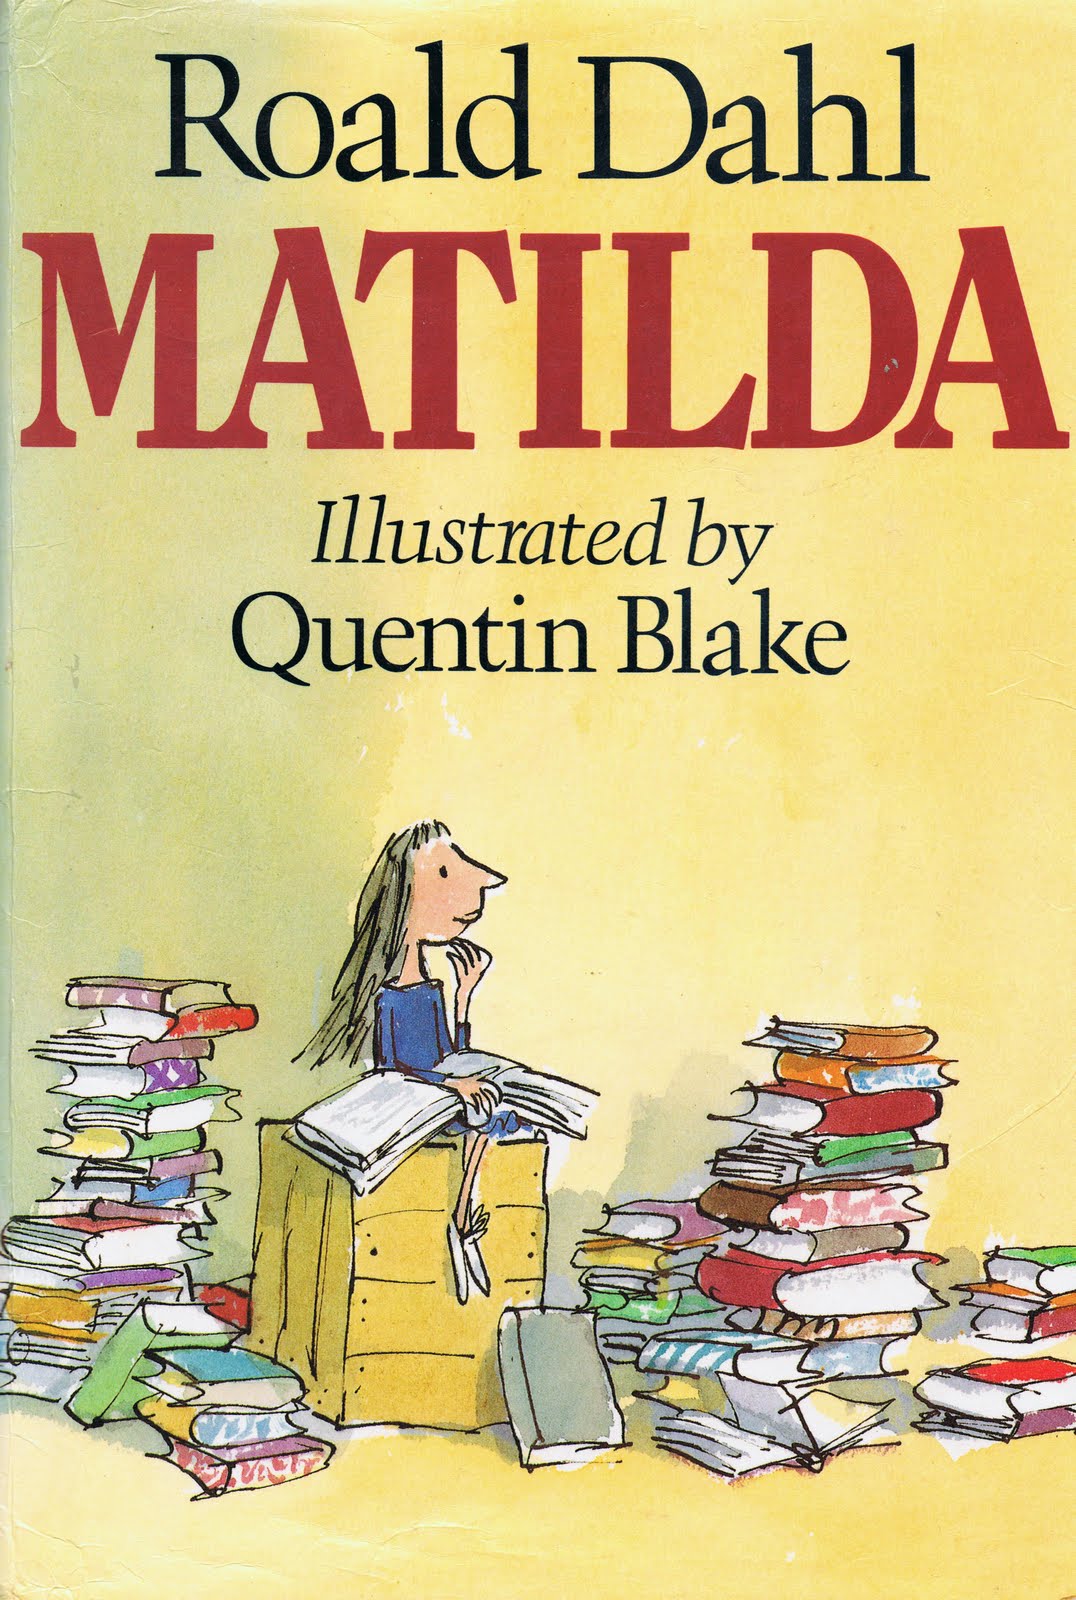 Matilda, Roald Dahl Wiki